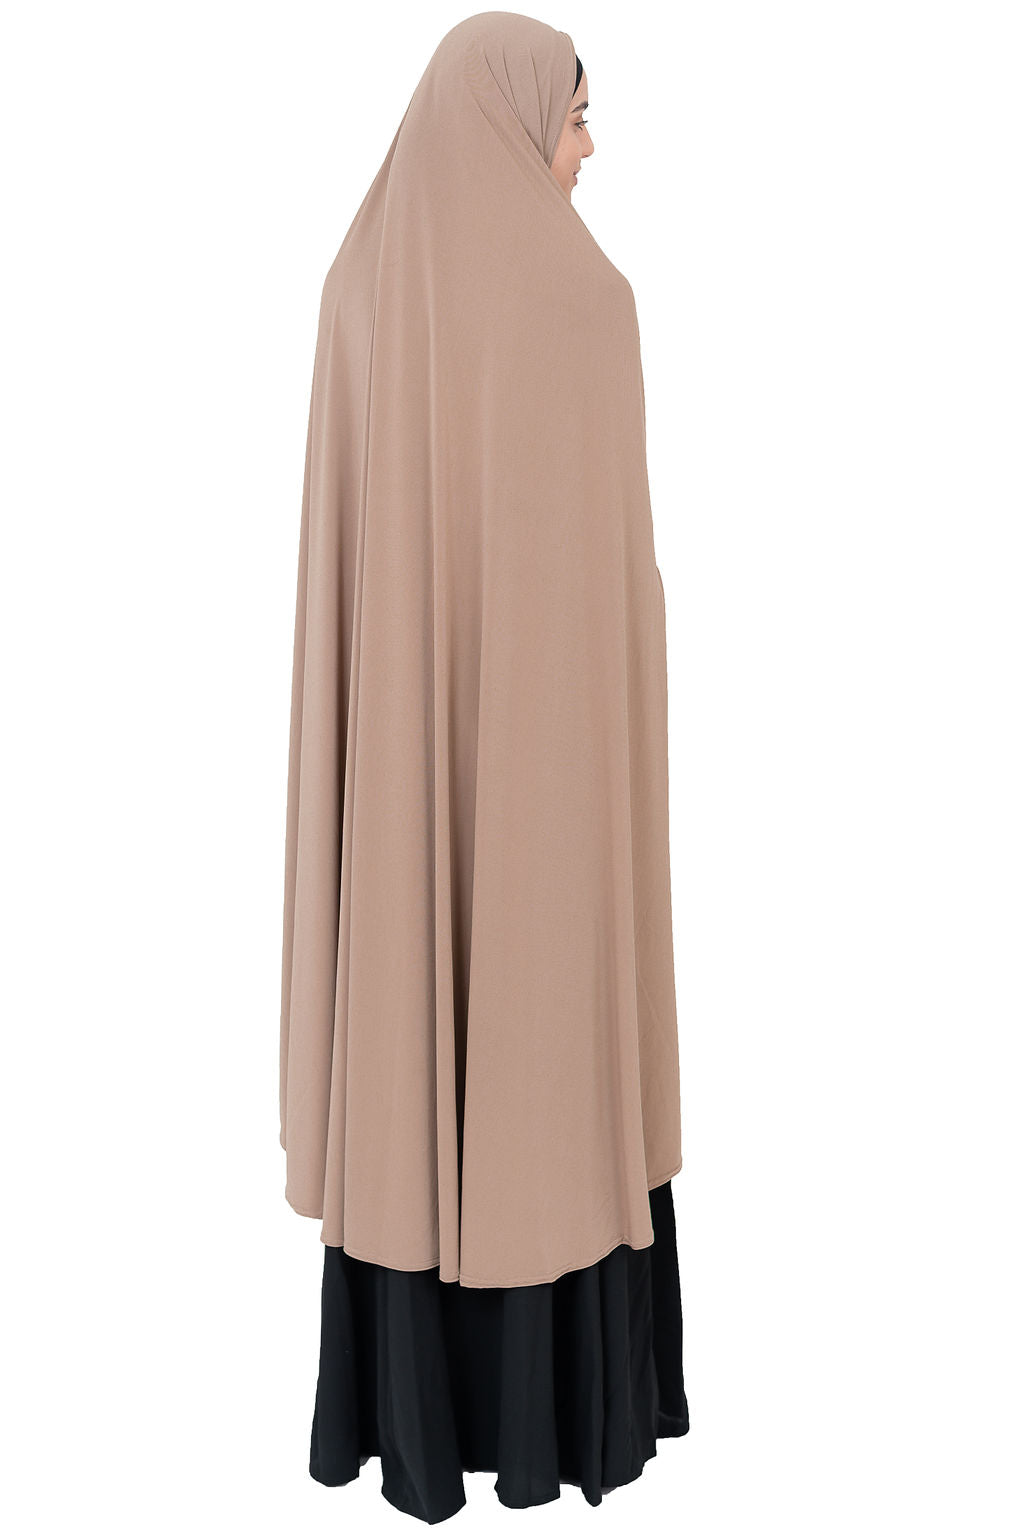 Long Sleeved Jelbab in Peanut